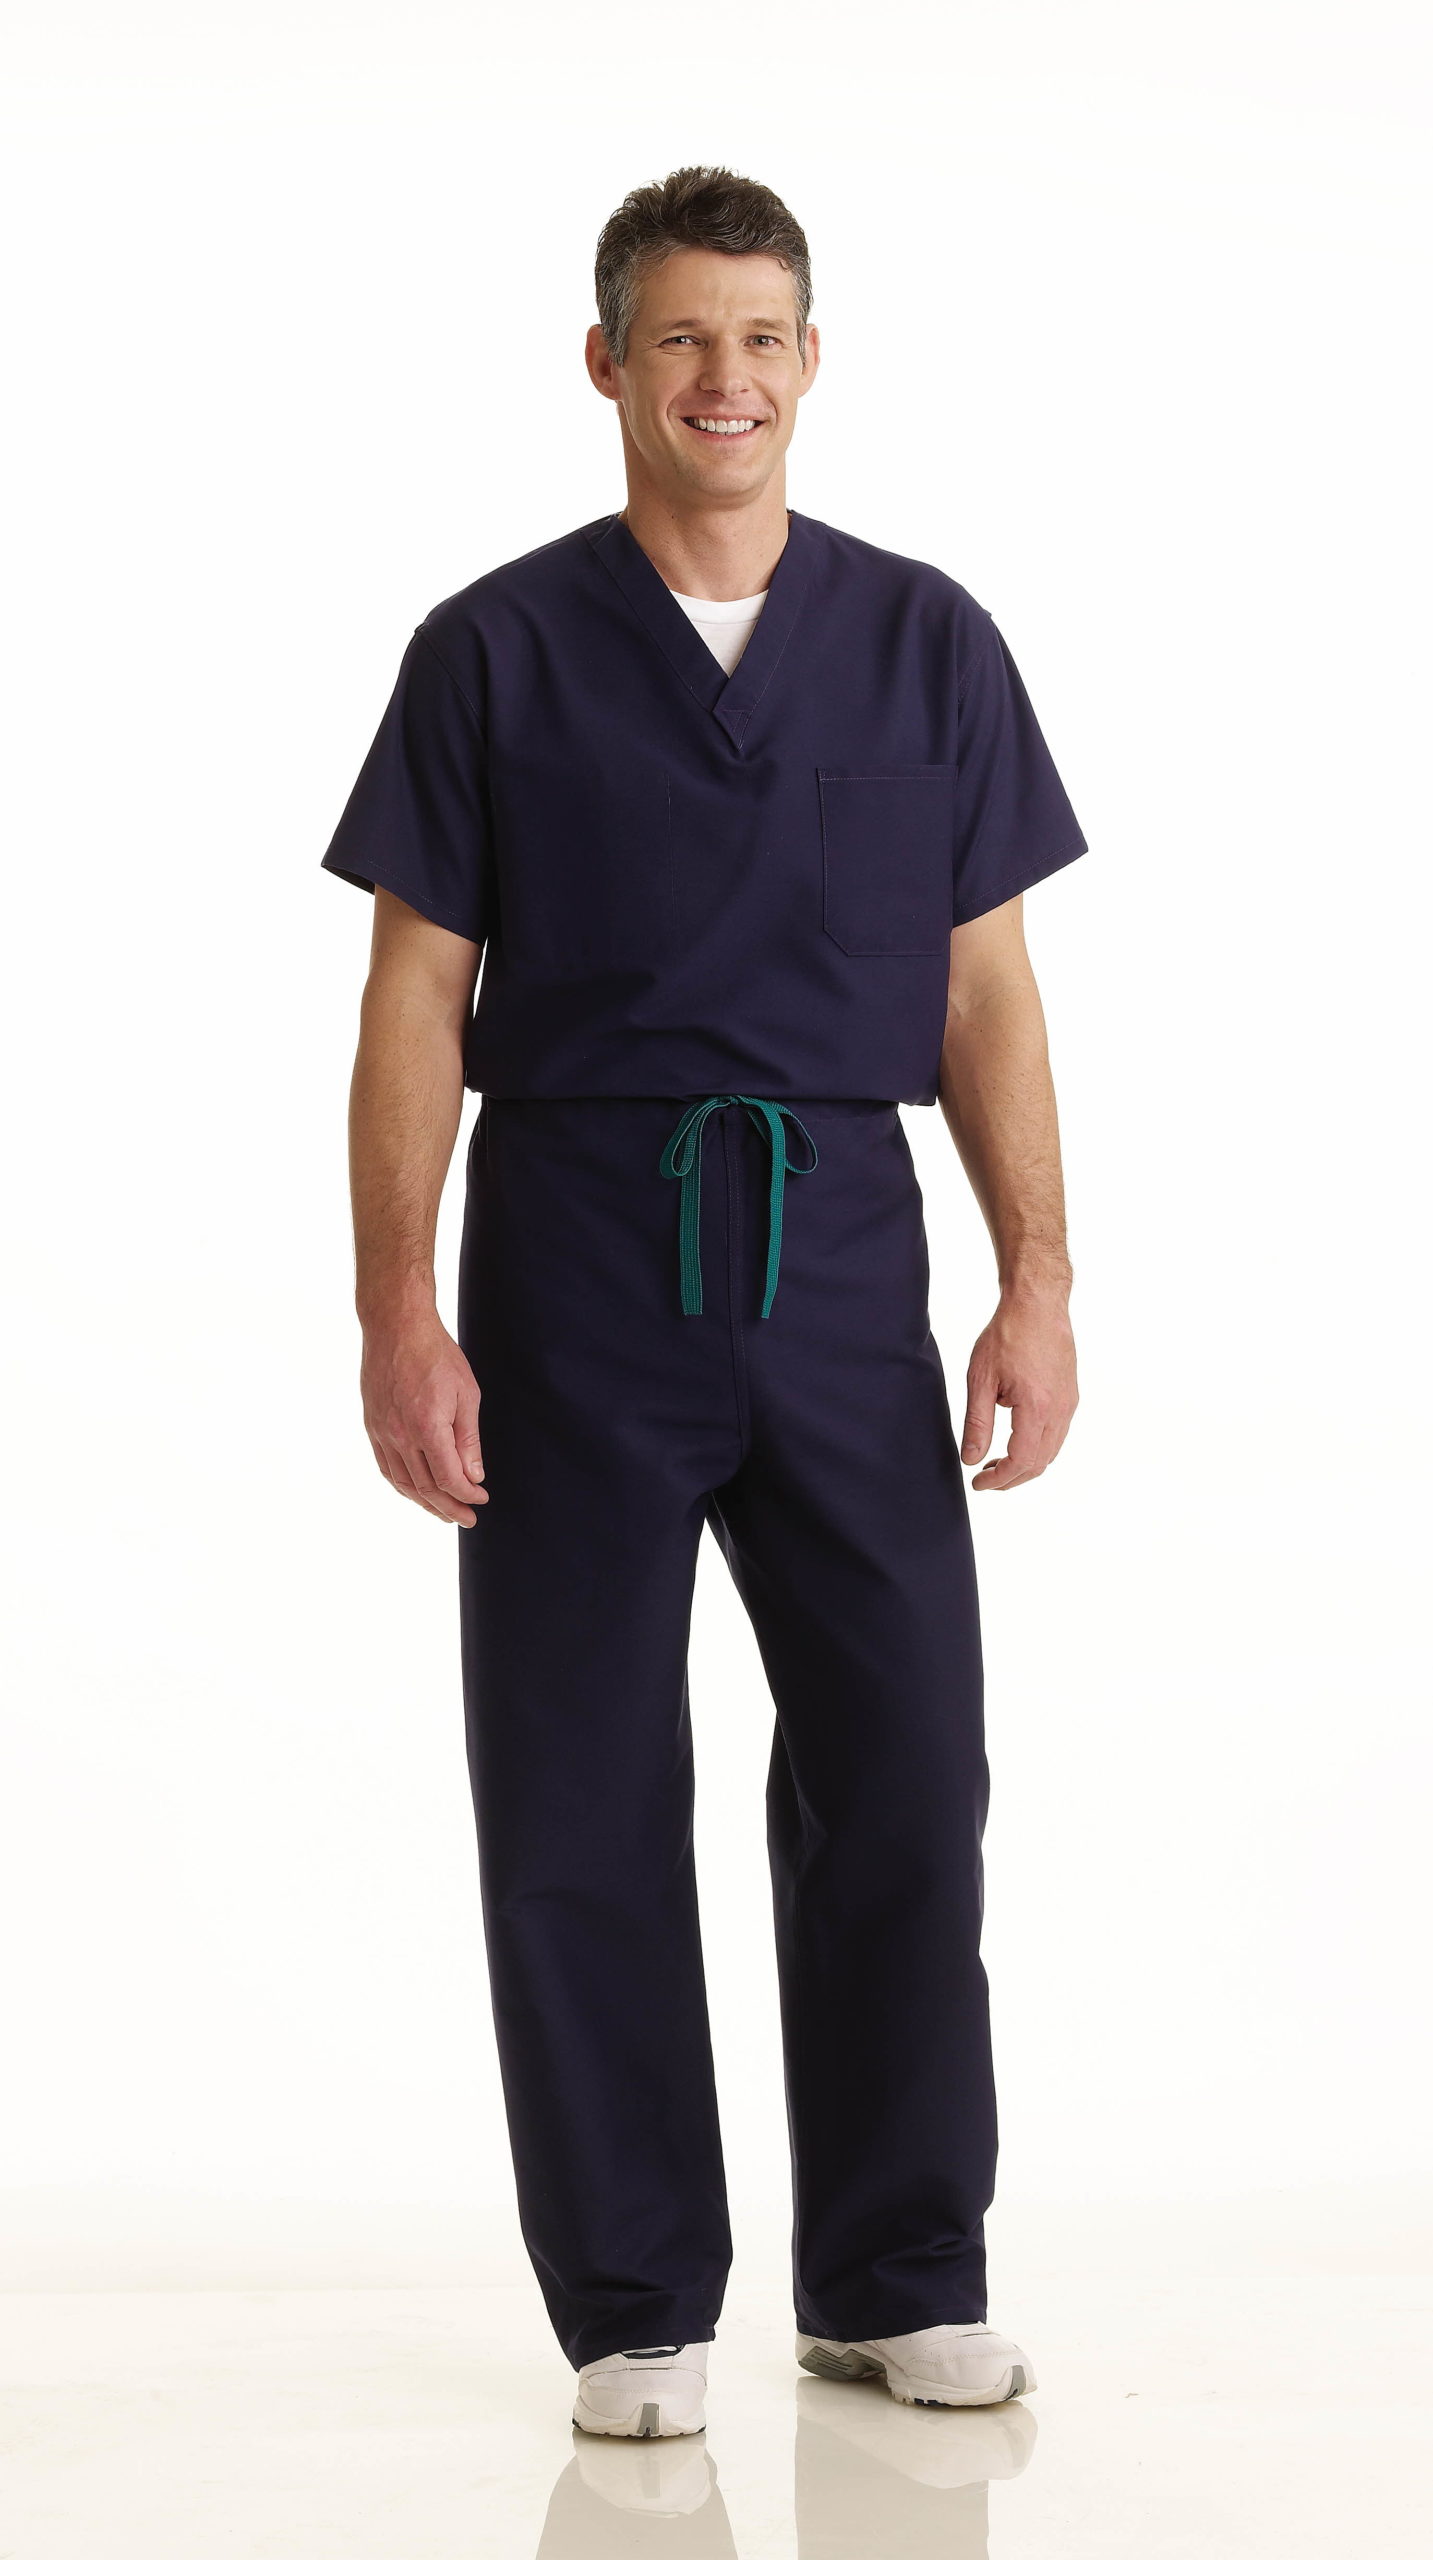 Cheap Nursing Scrubs for Women and Men  Ohio's Discount Medical Uniform  Store